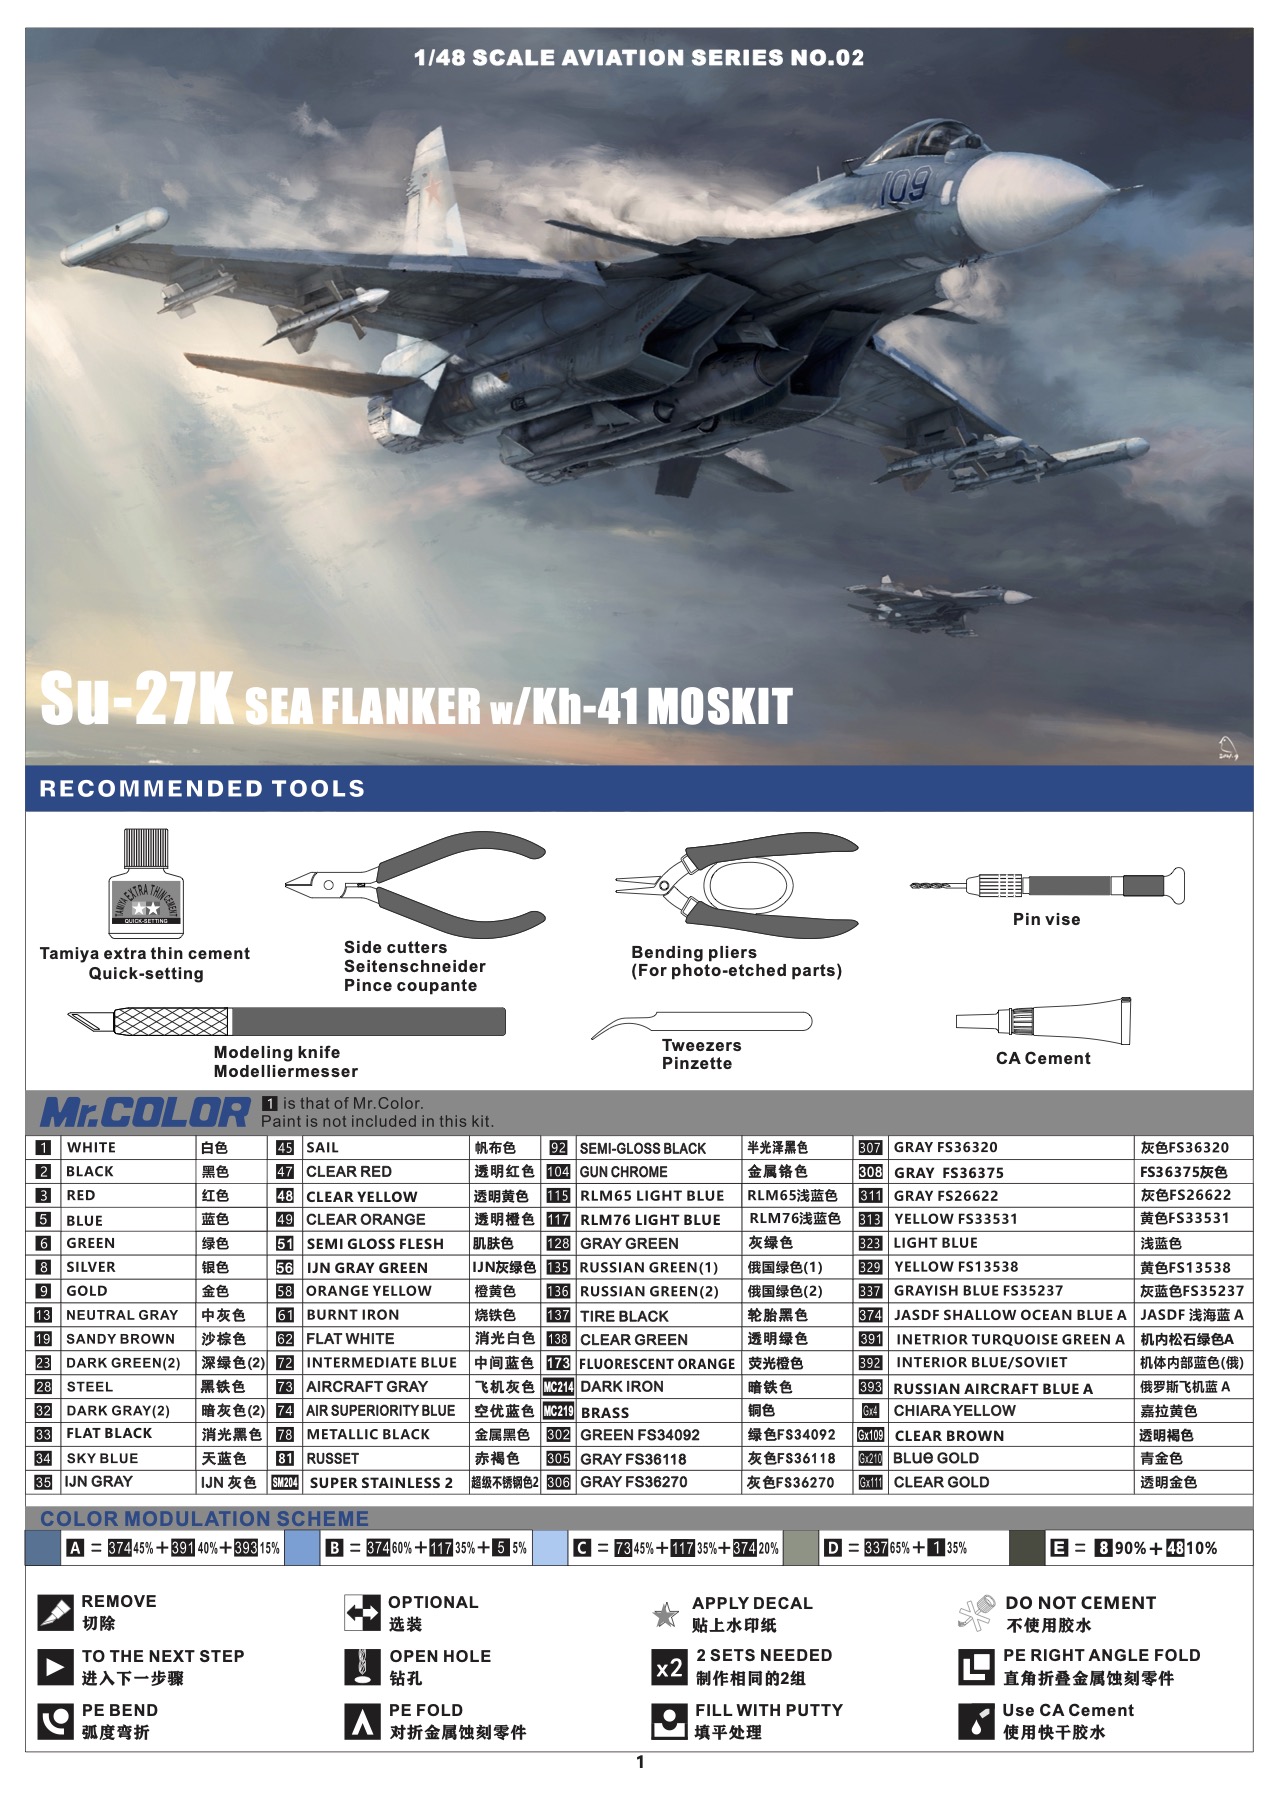 Su-33 Flanker-D (Su-27K) – Sea Flanker